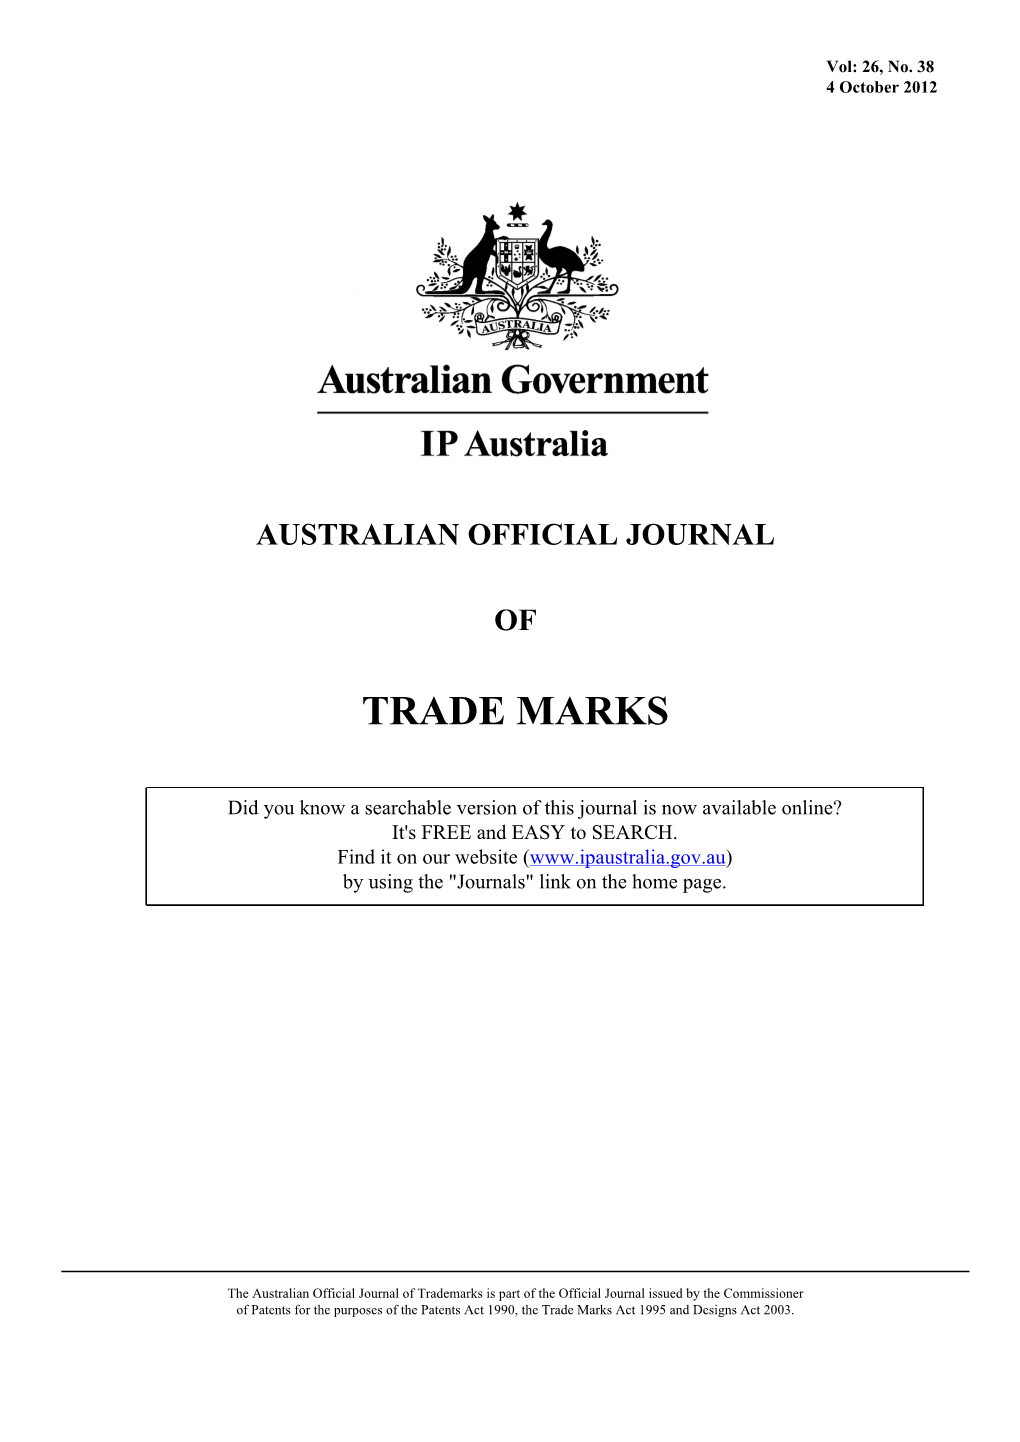 AUSTRALIAN OFFICIAL JOURNAL of TRADE MARKS 4 October 2012